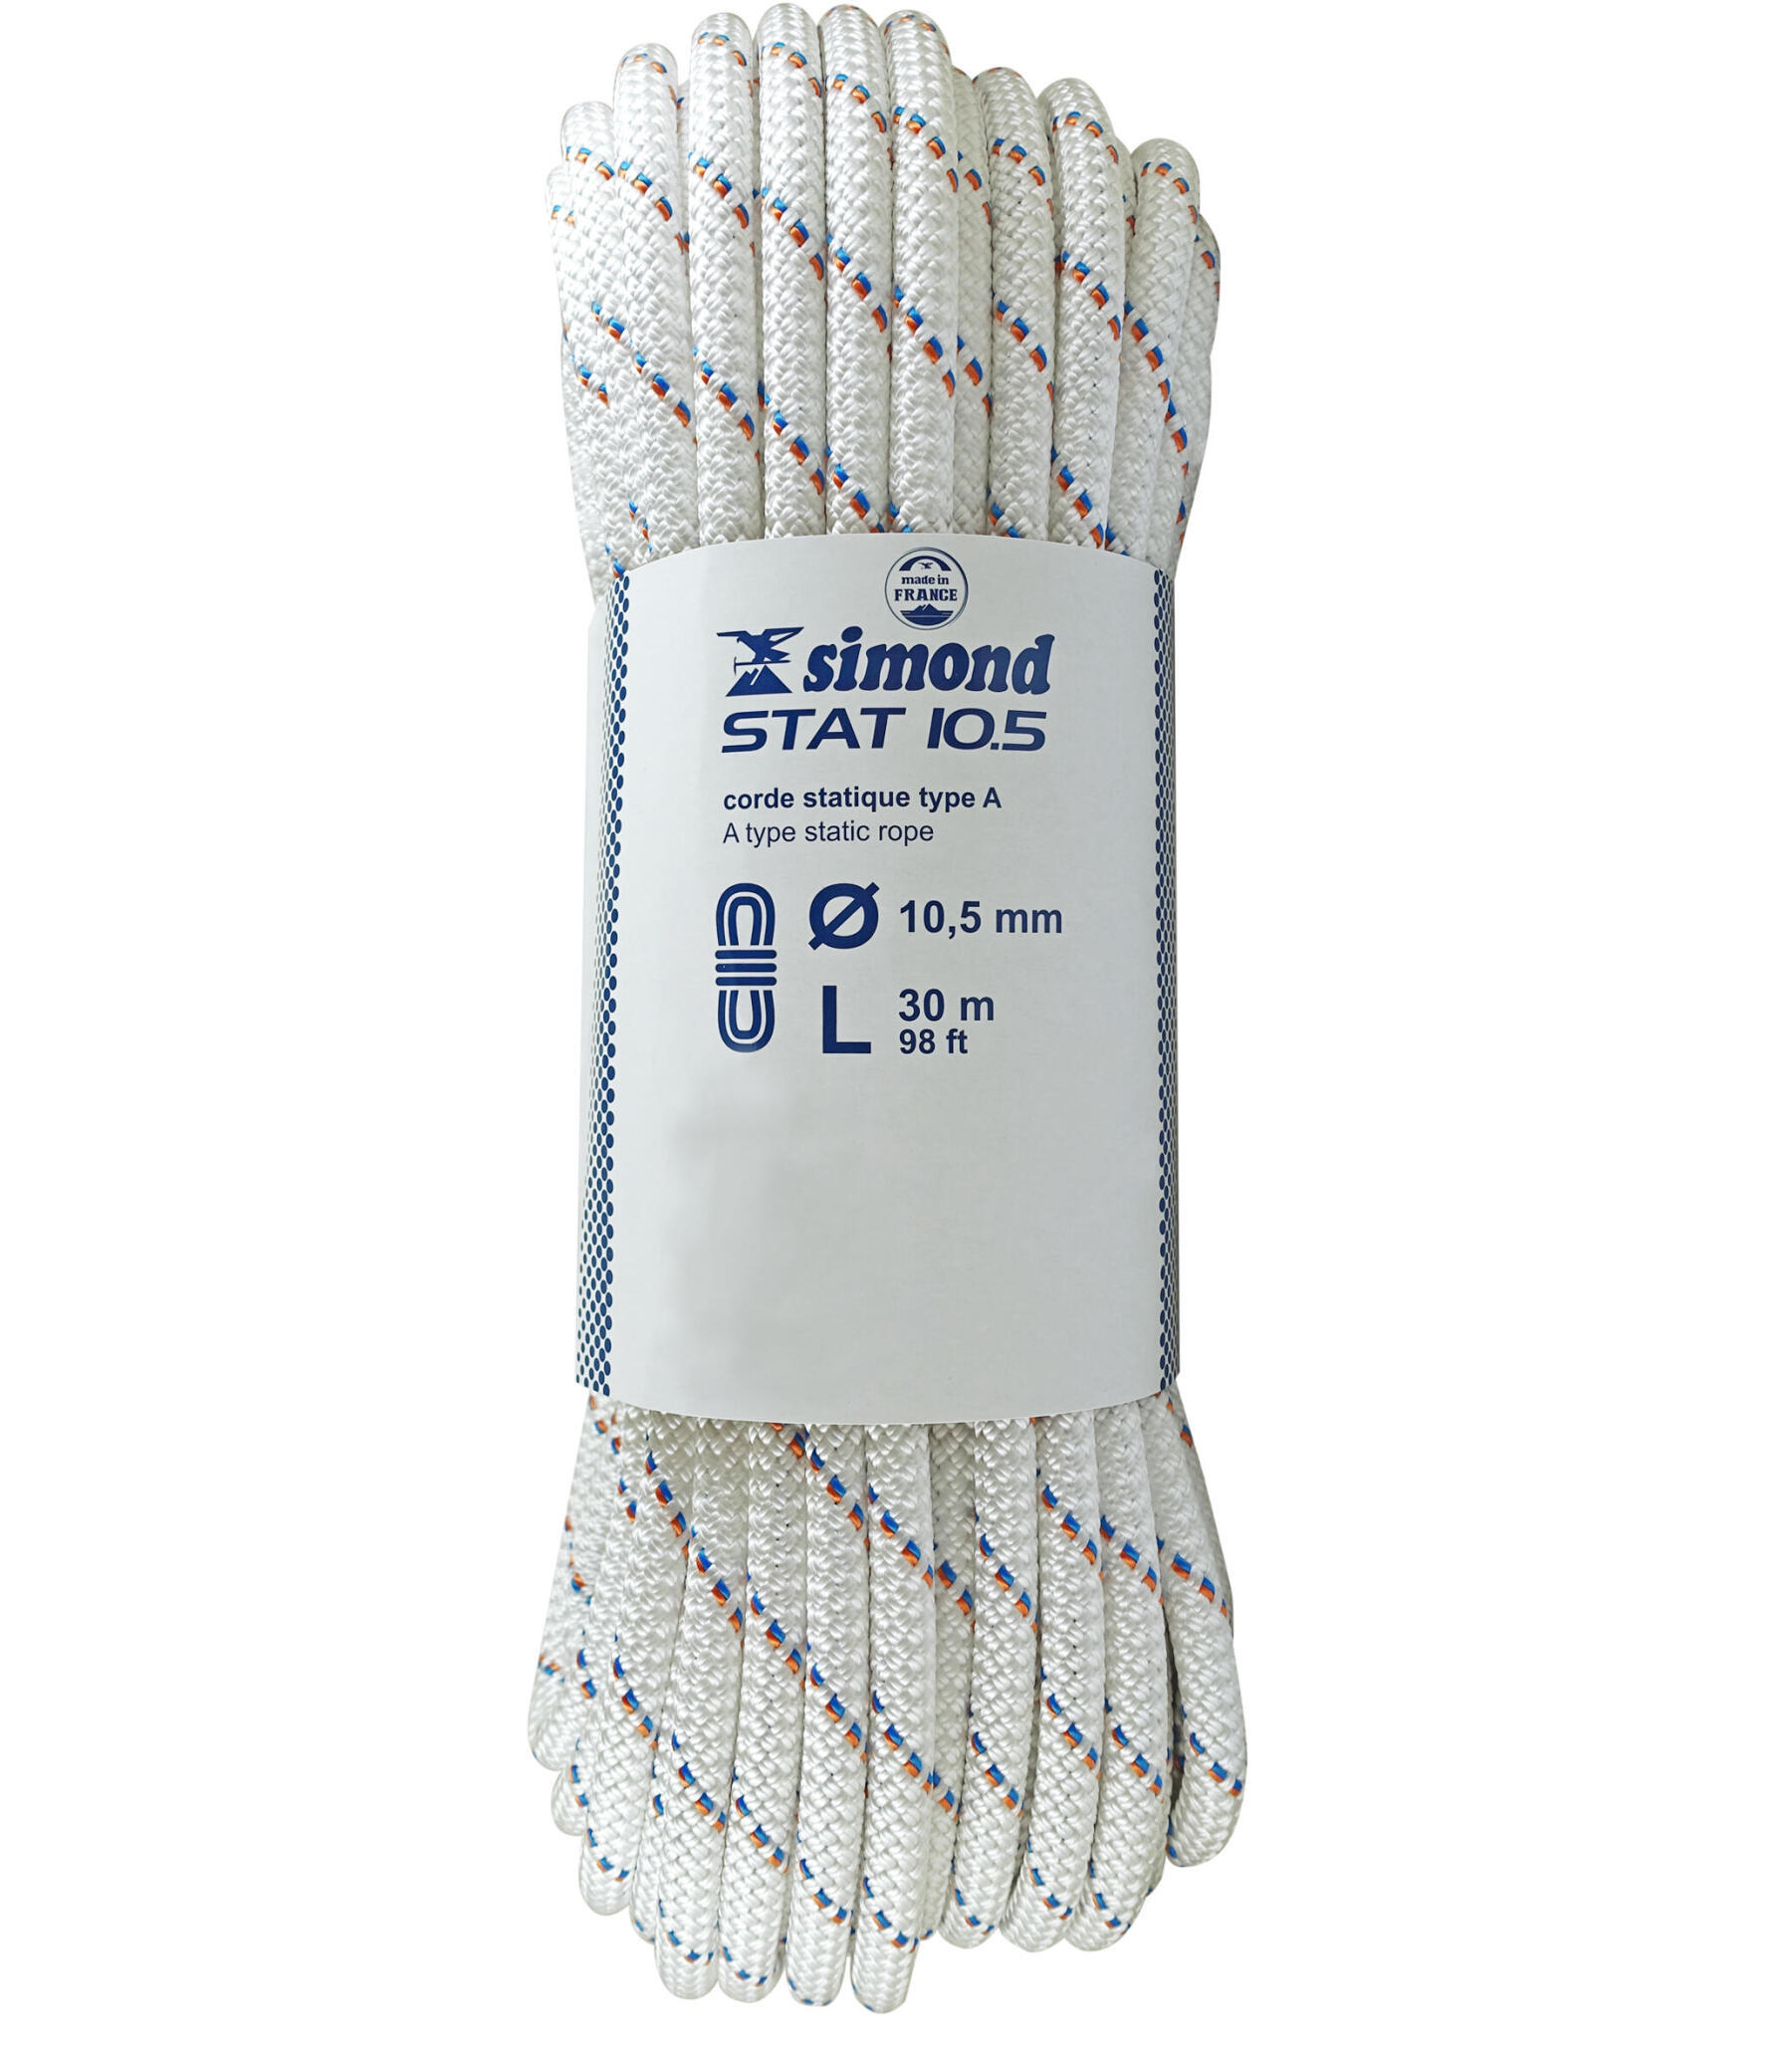 Seil Stat 10.5 30 m simond 2017